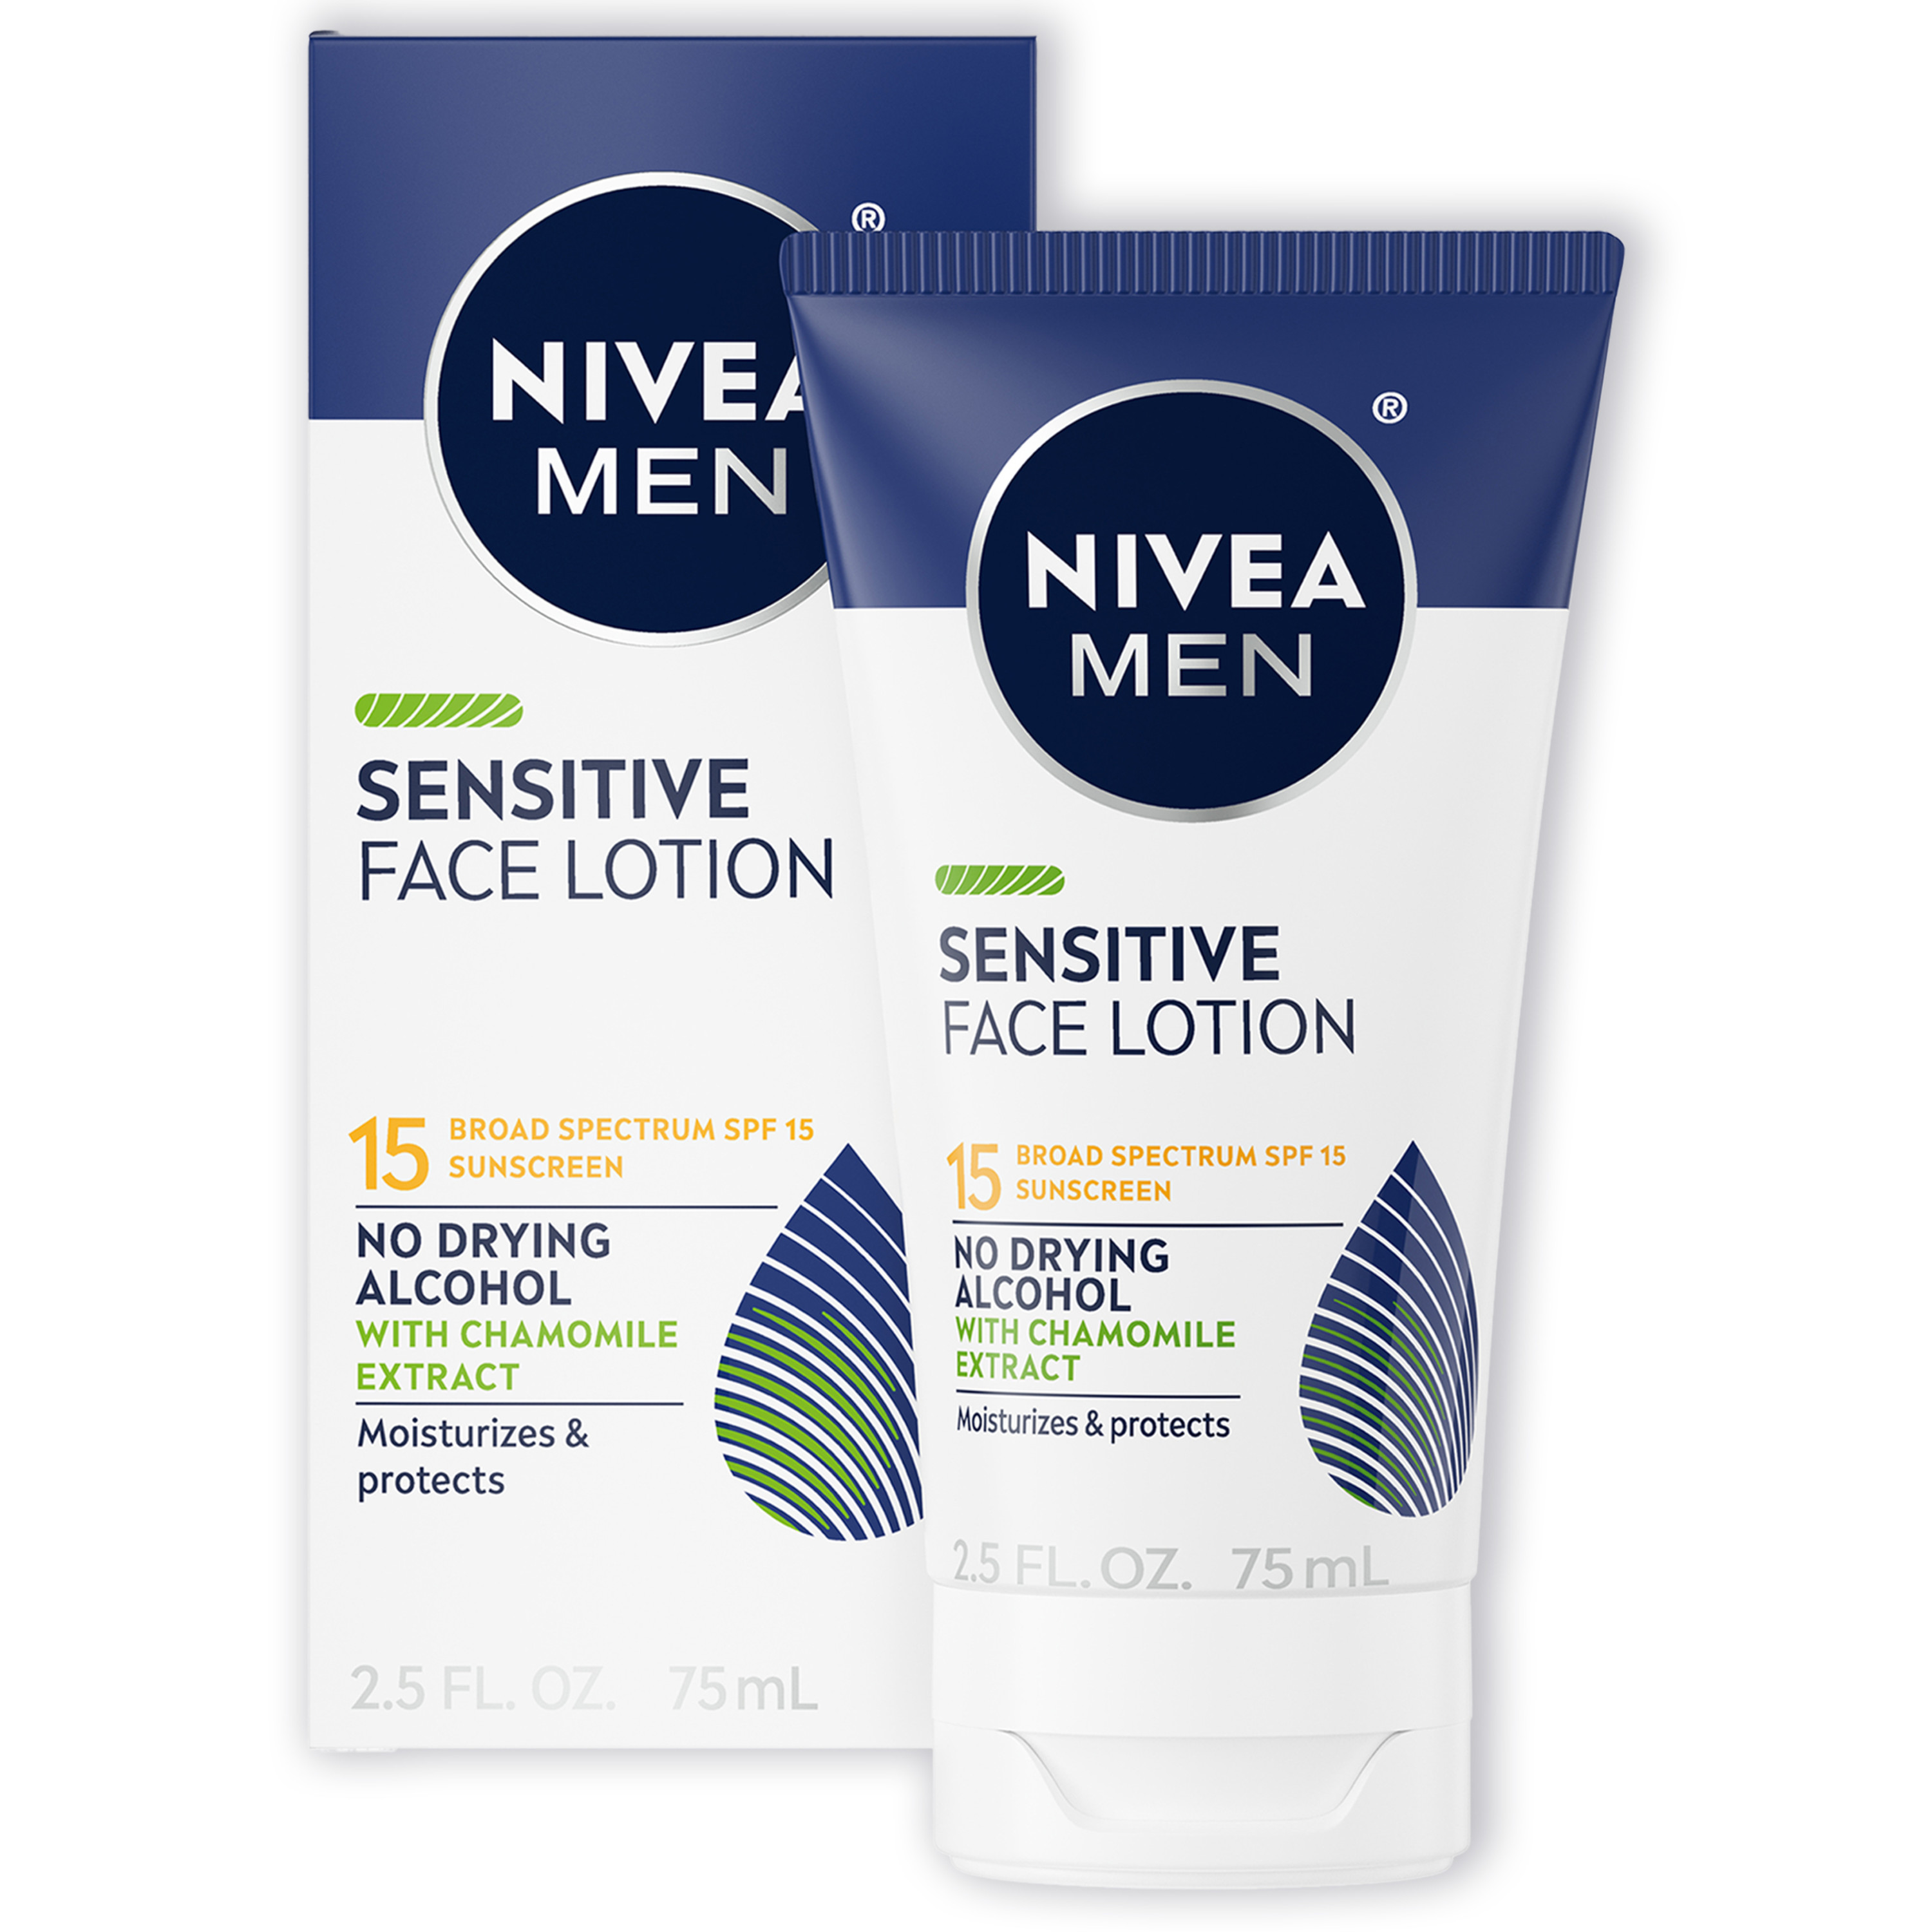 NIVEA MEN Sensitive Face Lotion with Broad Spectrum Sunscreen, SPF 15, 2.5 fl oz Tube - image 1 of 8